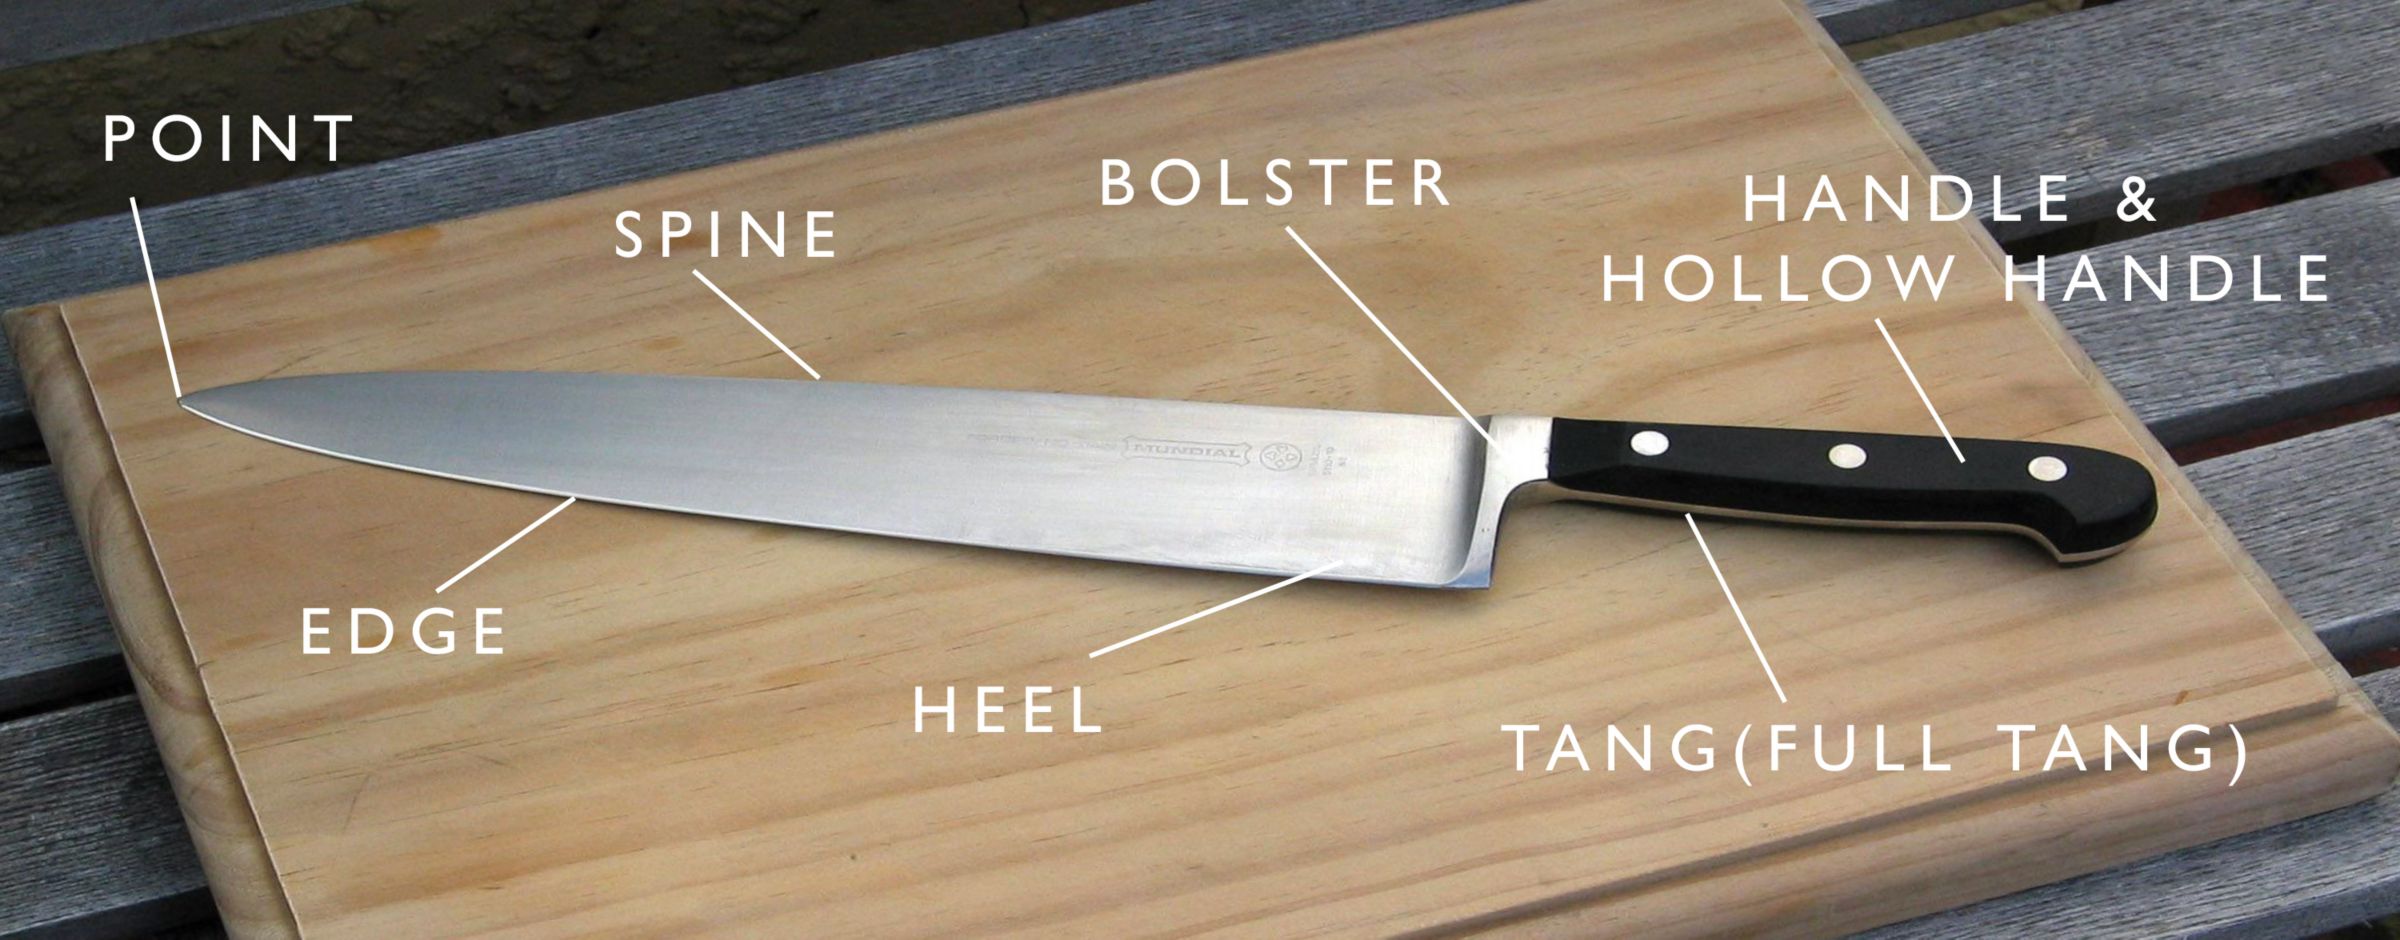 Knives diagram